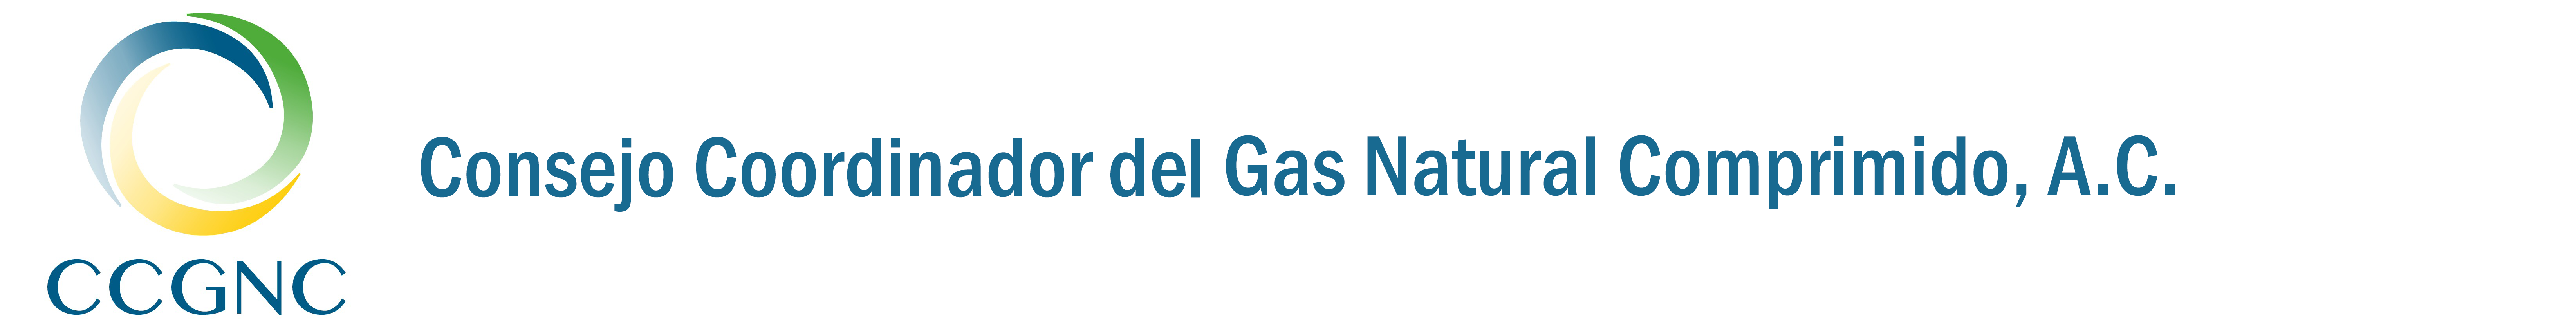 Consejo Coordinador del Gas Natural Comprimido